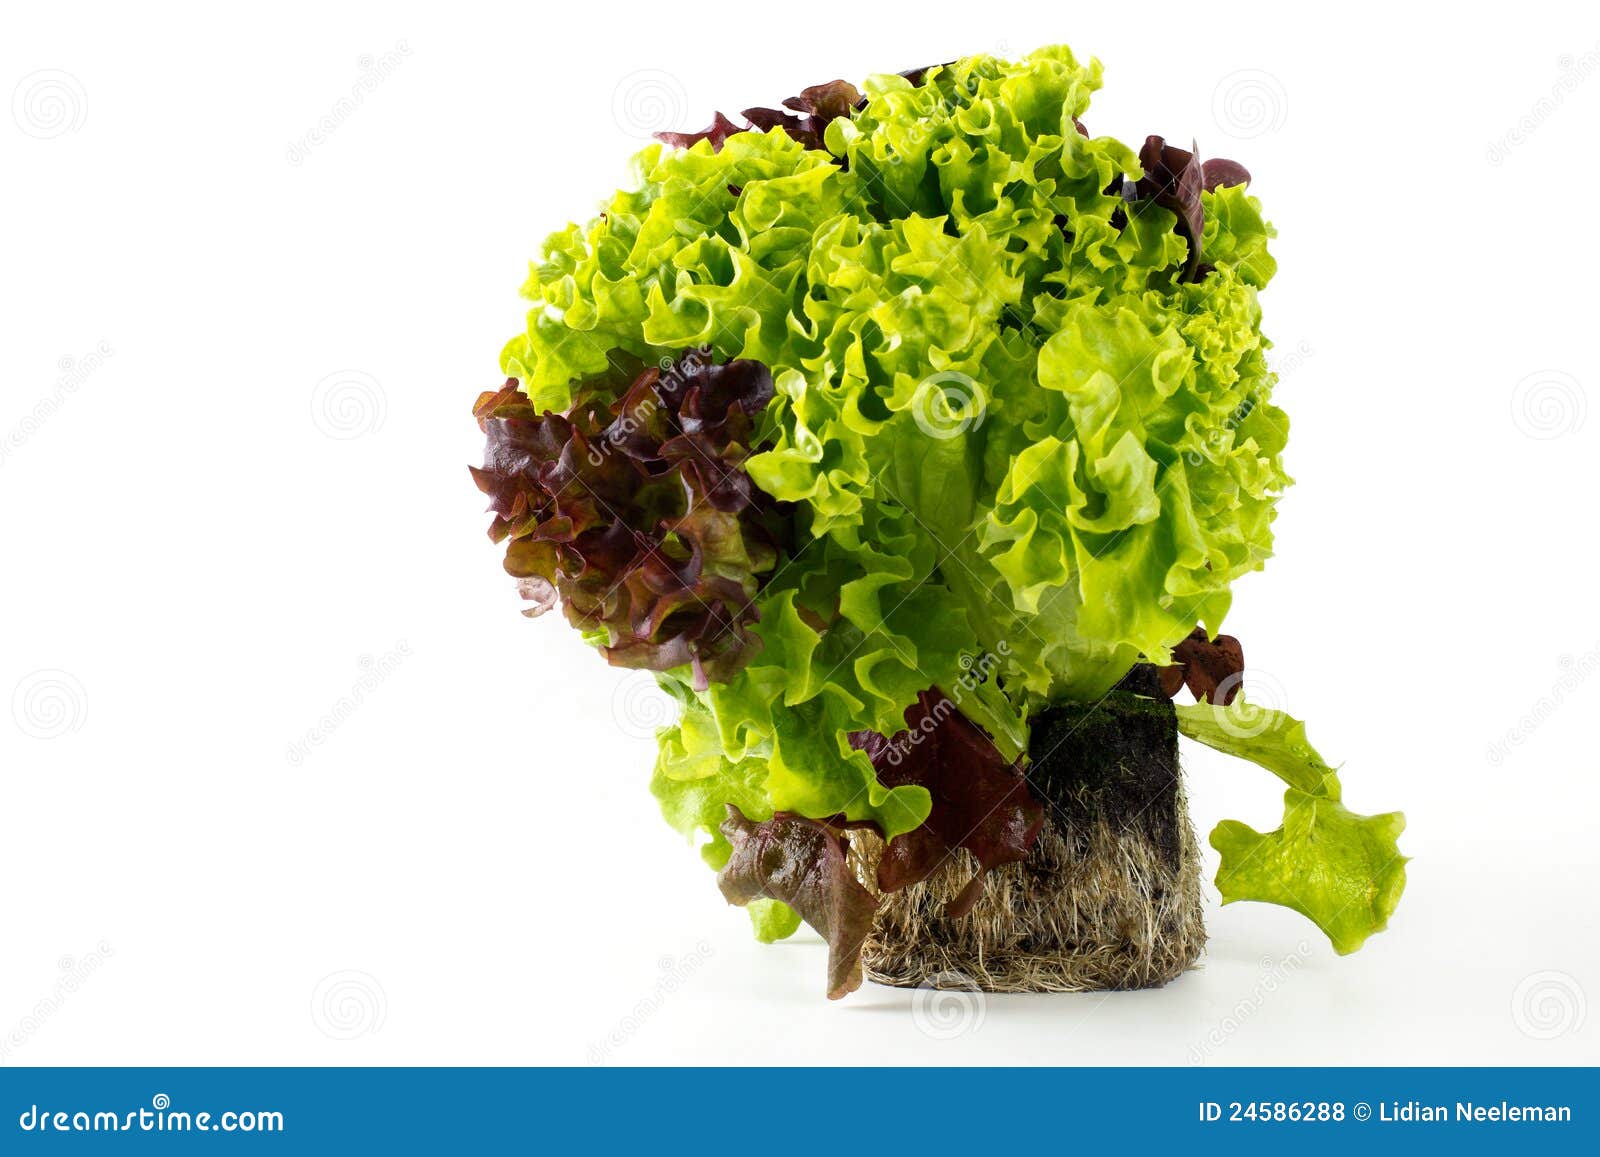 Lettuce plant stock photo. Image of clod, leaf, ball 